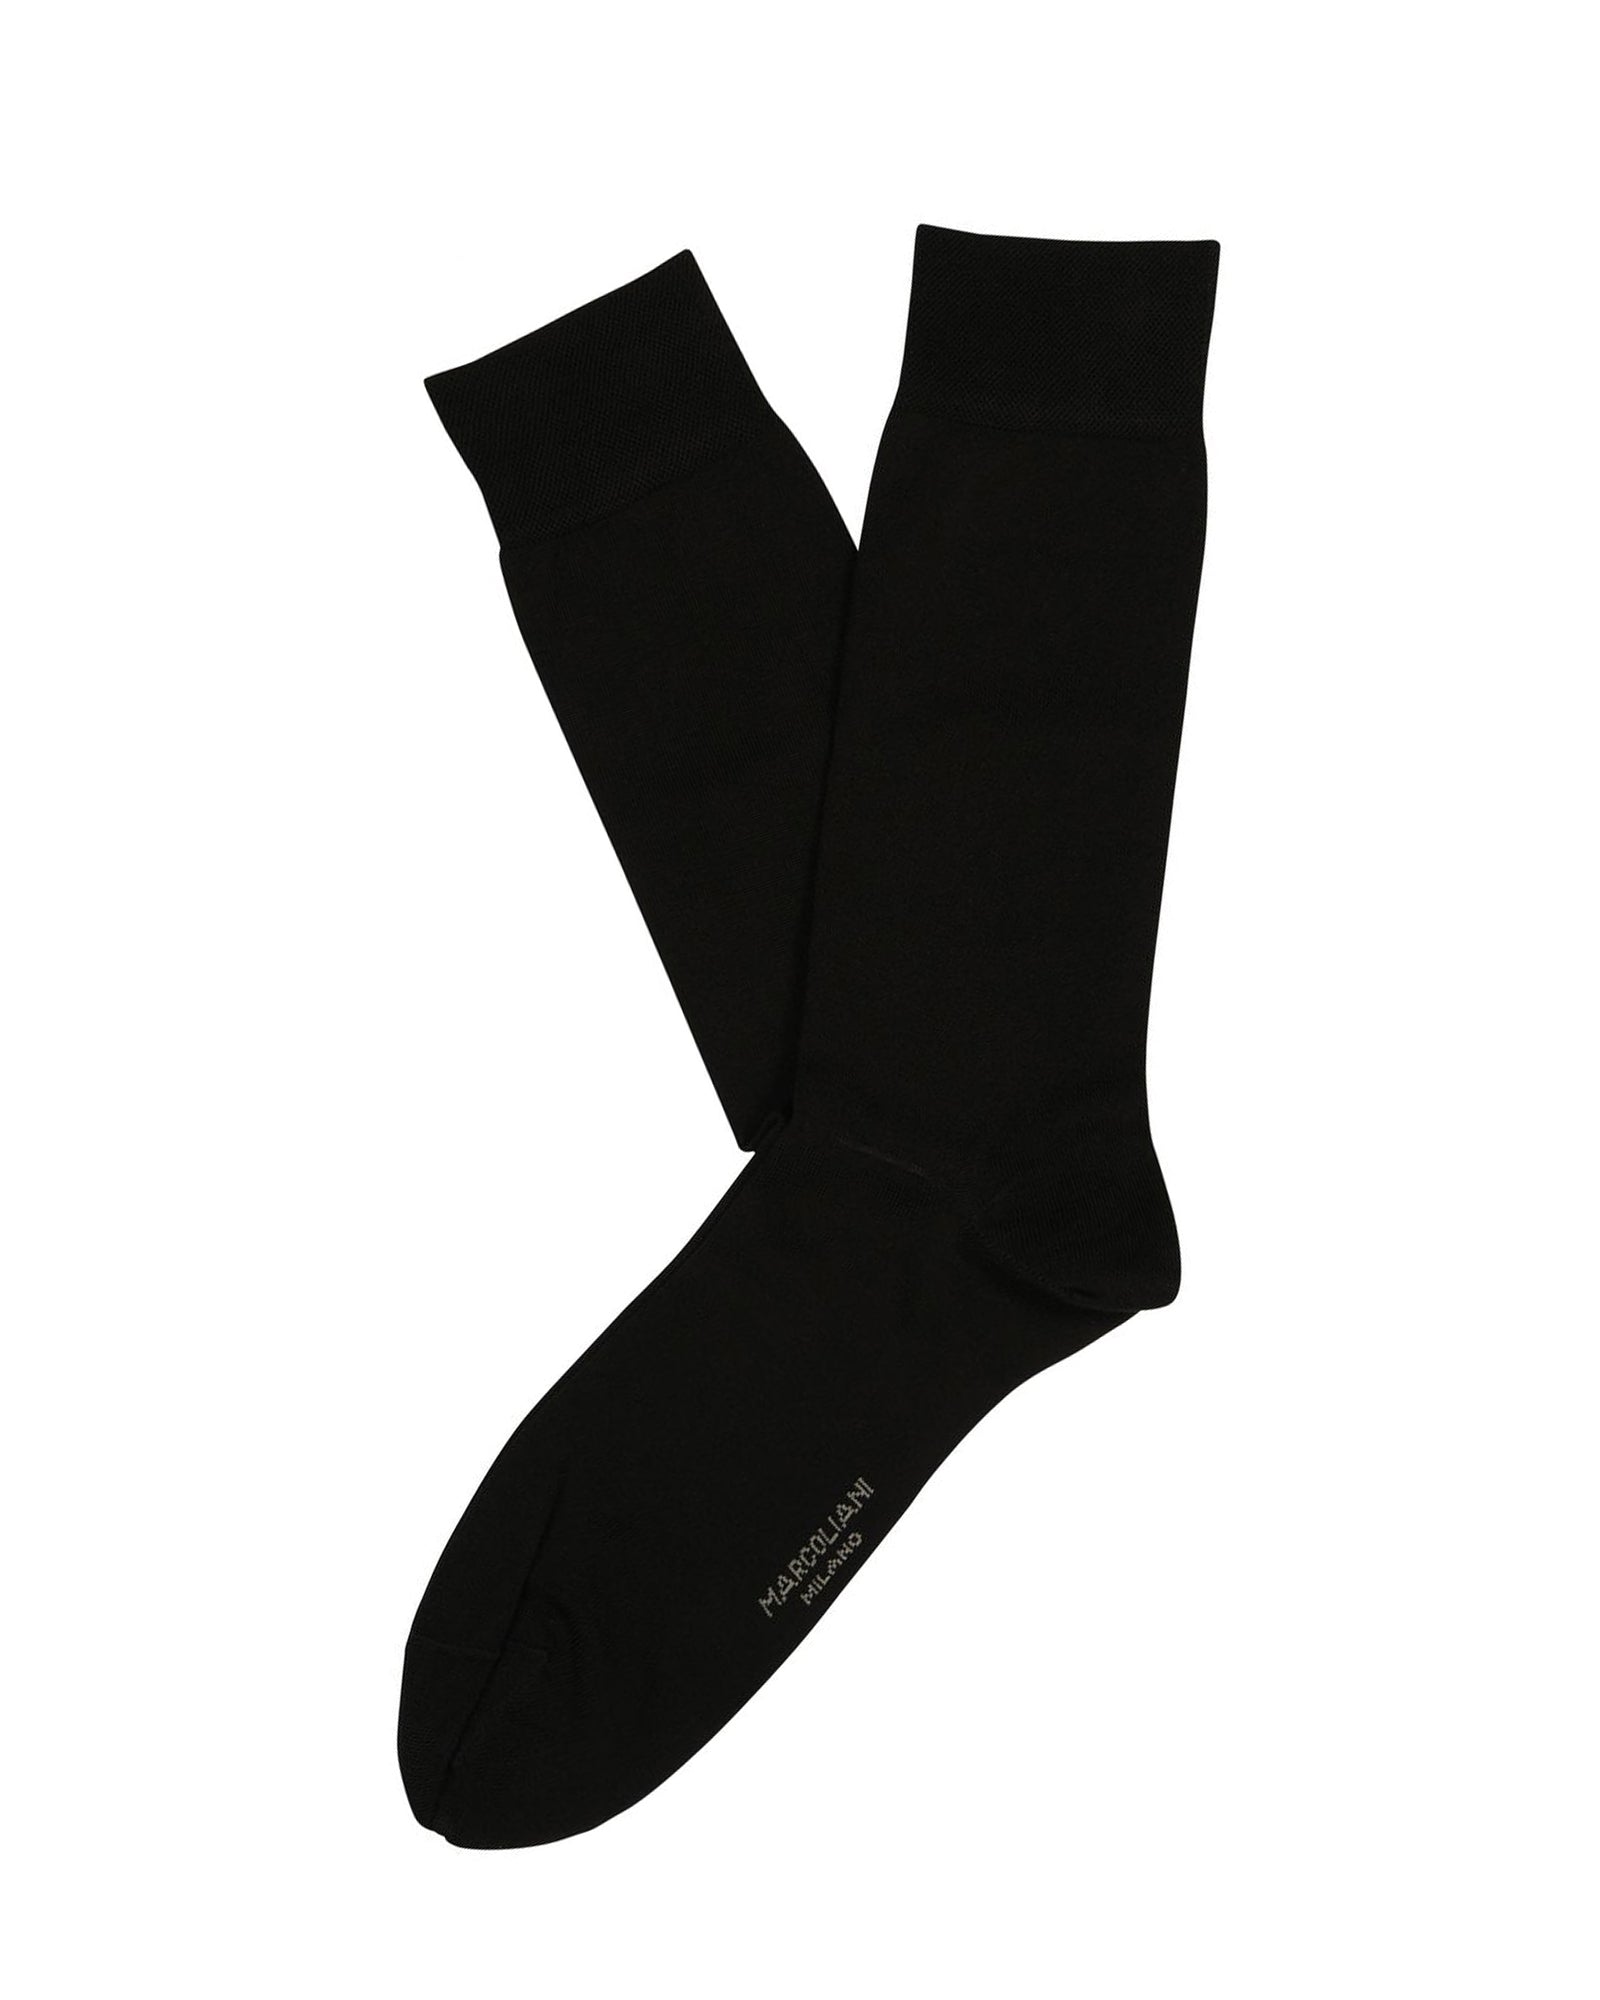 Marcoliani Pima Cotton Classic Plain Black Socks